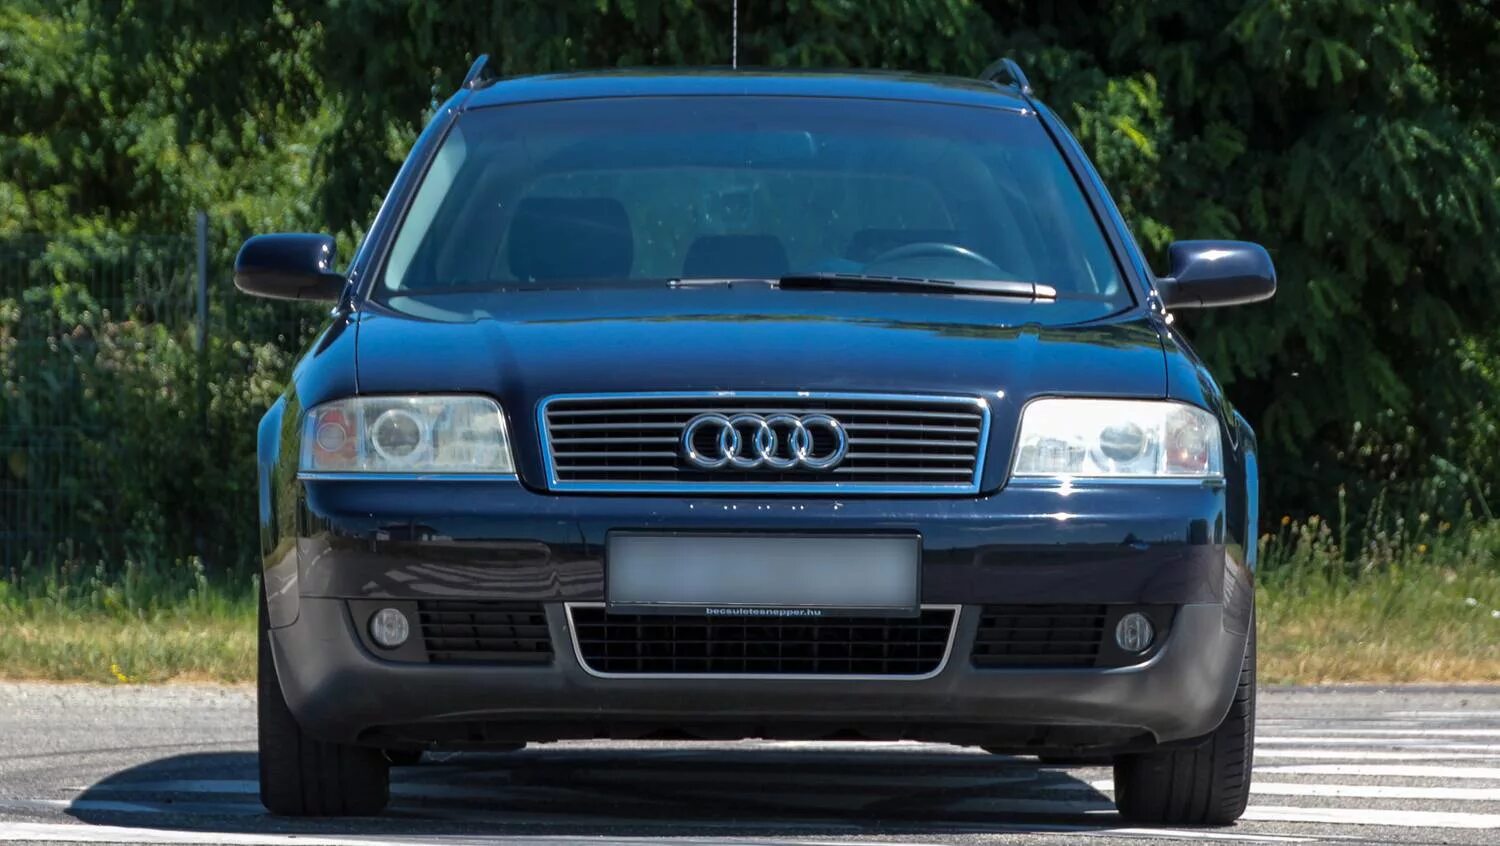 200 20 а 6 60. Audi a6 c5 2002. "Audi" "a4" "2000" ao. Audi a6 c5 avant антенна короткий. "Audi" "a4" "1997" af.